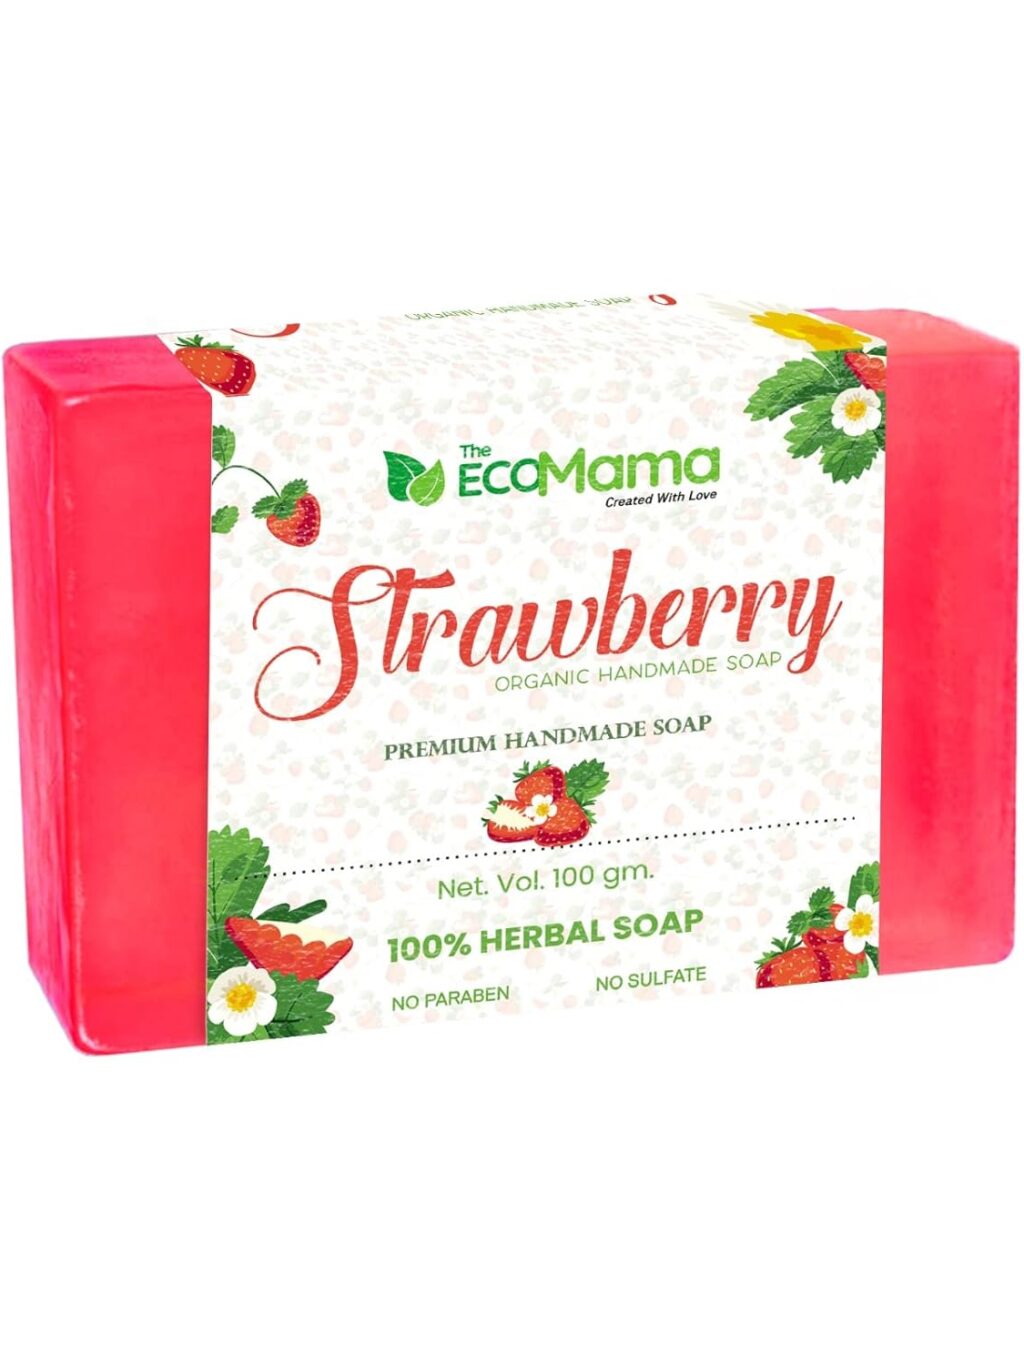 Strawberry Organic Handmade Soap